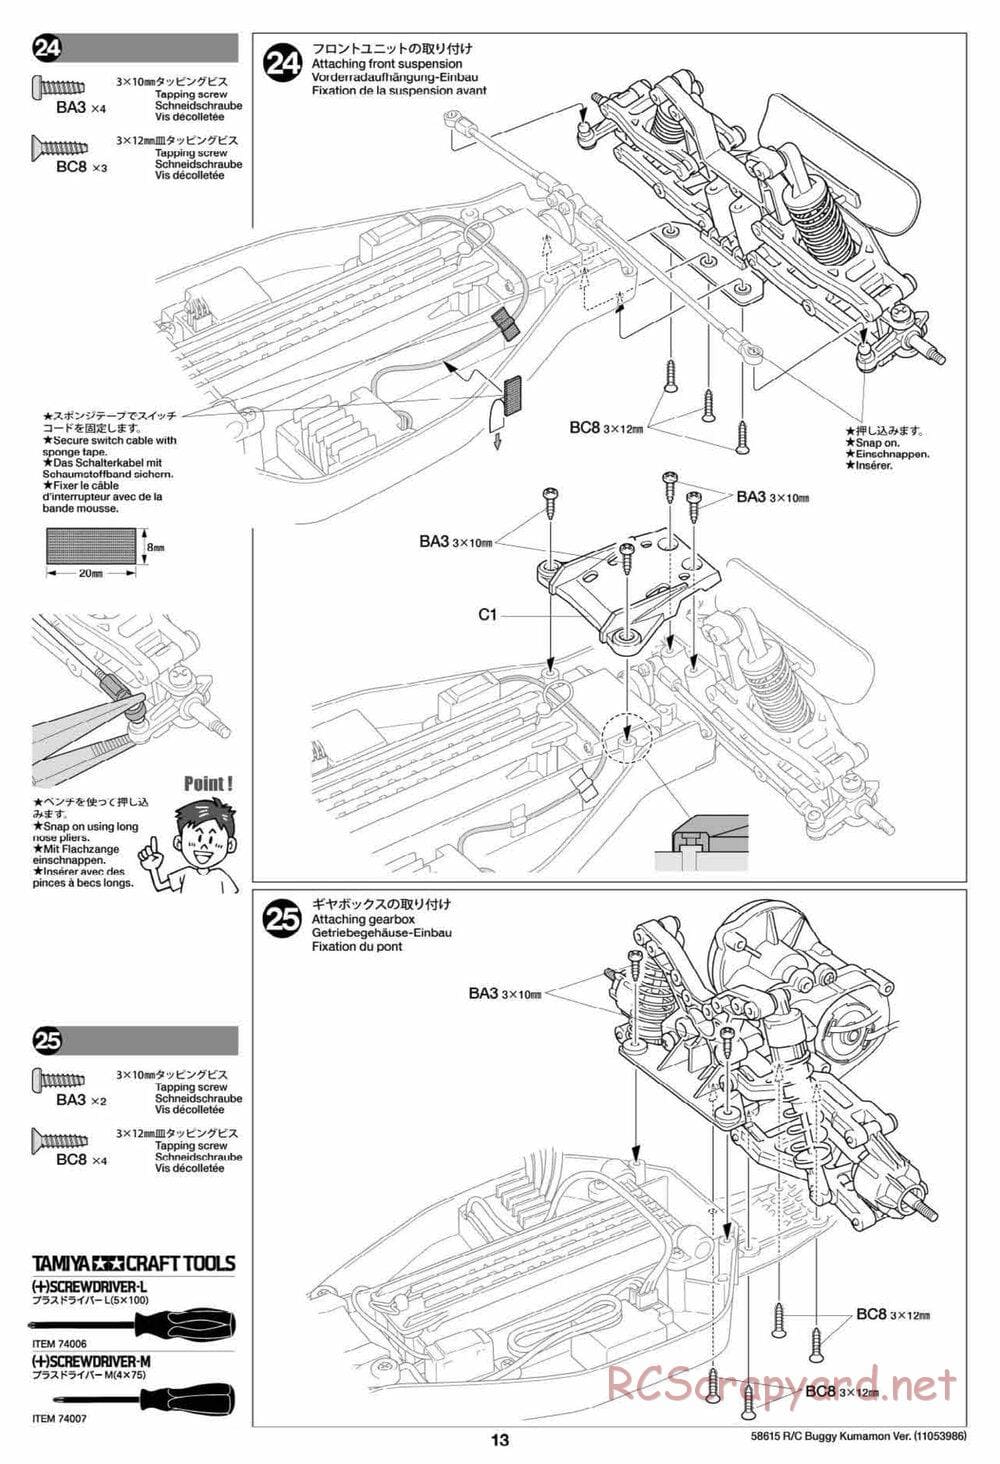 Tamiya - Buggy Kumamon Version Chassis - Manual - Page 13